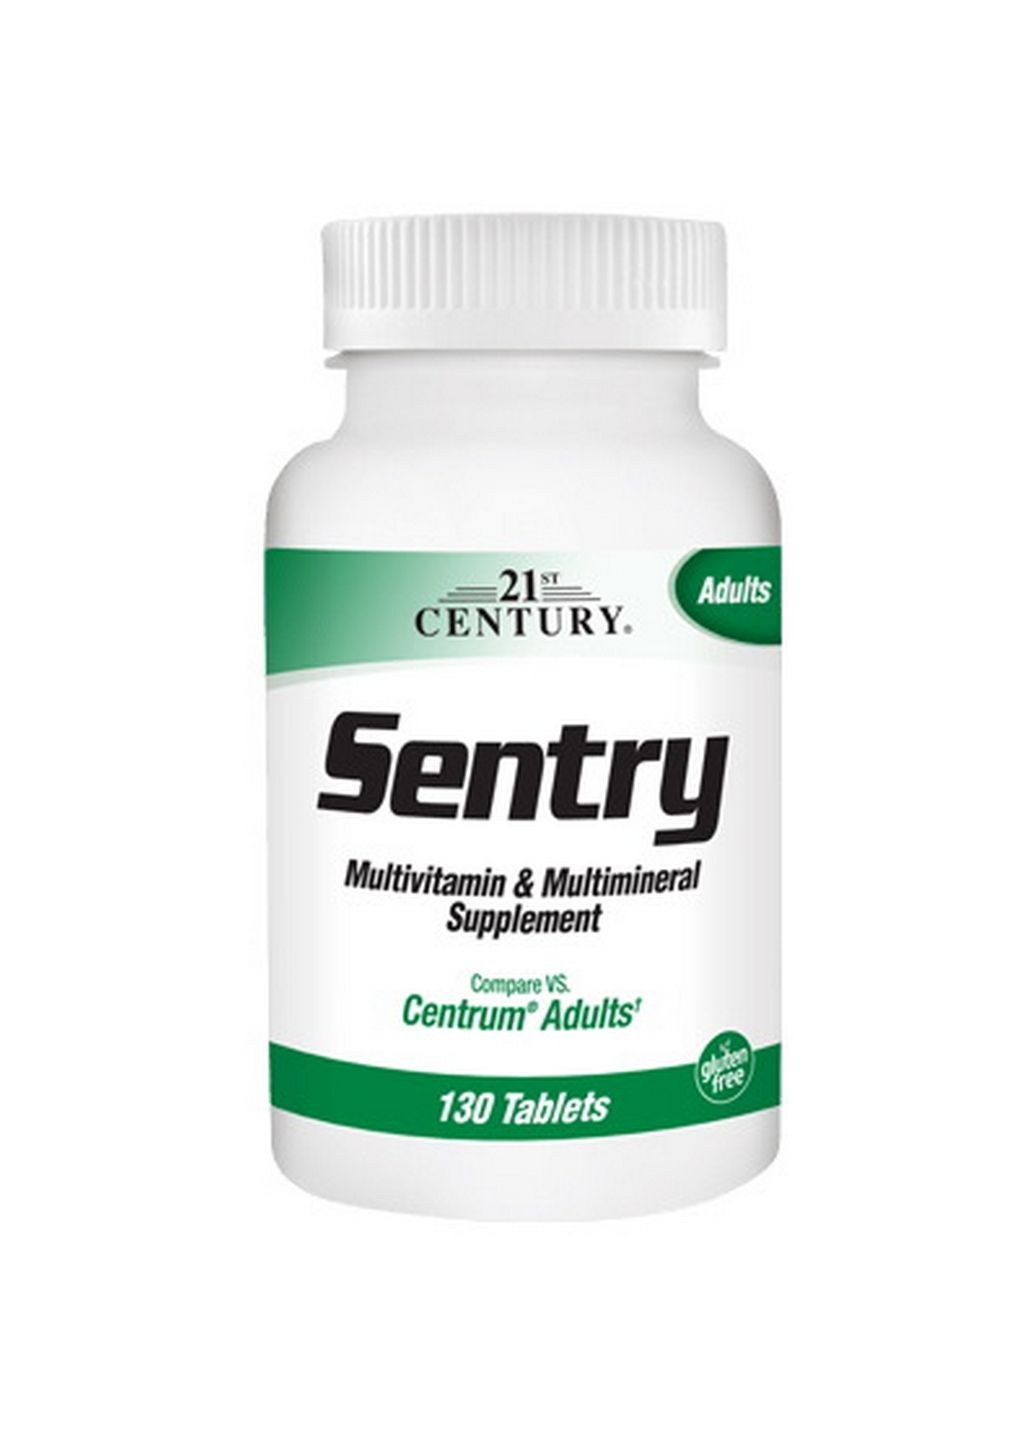 Витамины и минералы Sentry Multivitamin and Multimineral, 130 таблеток 21st Century (293417030)